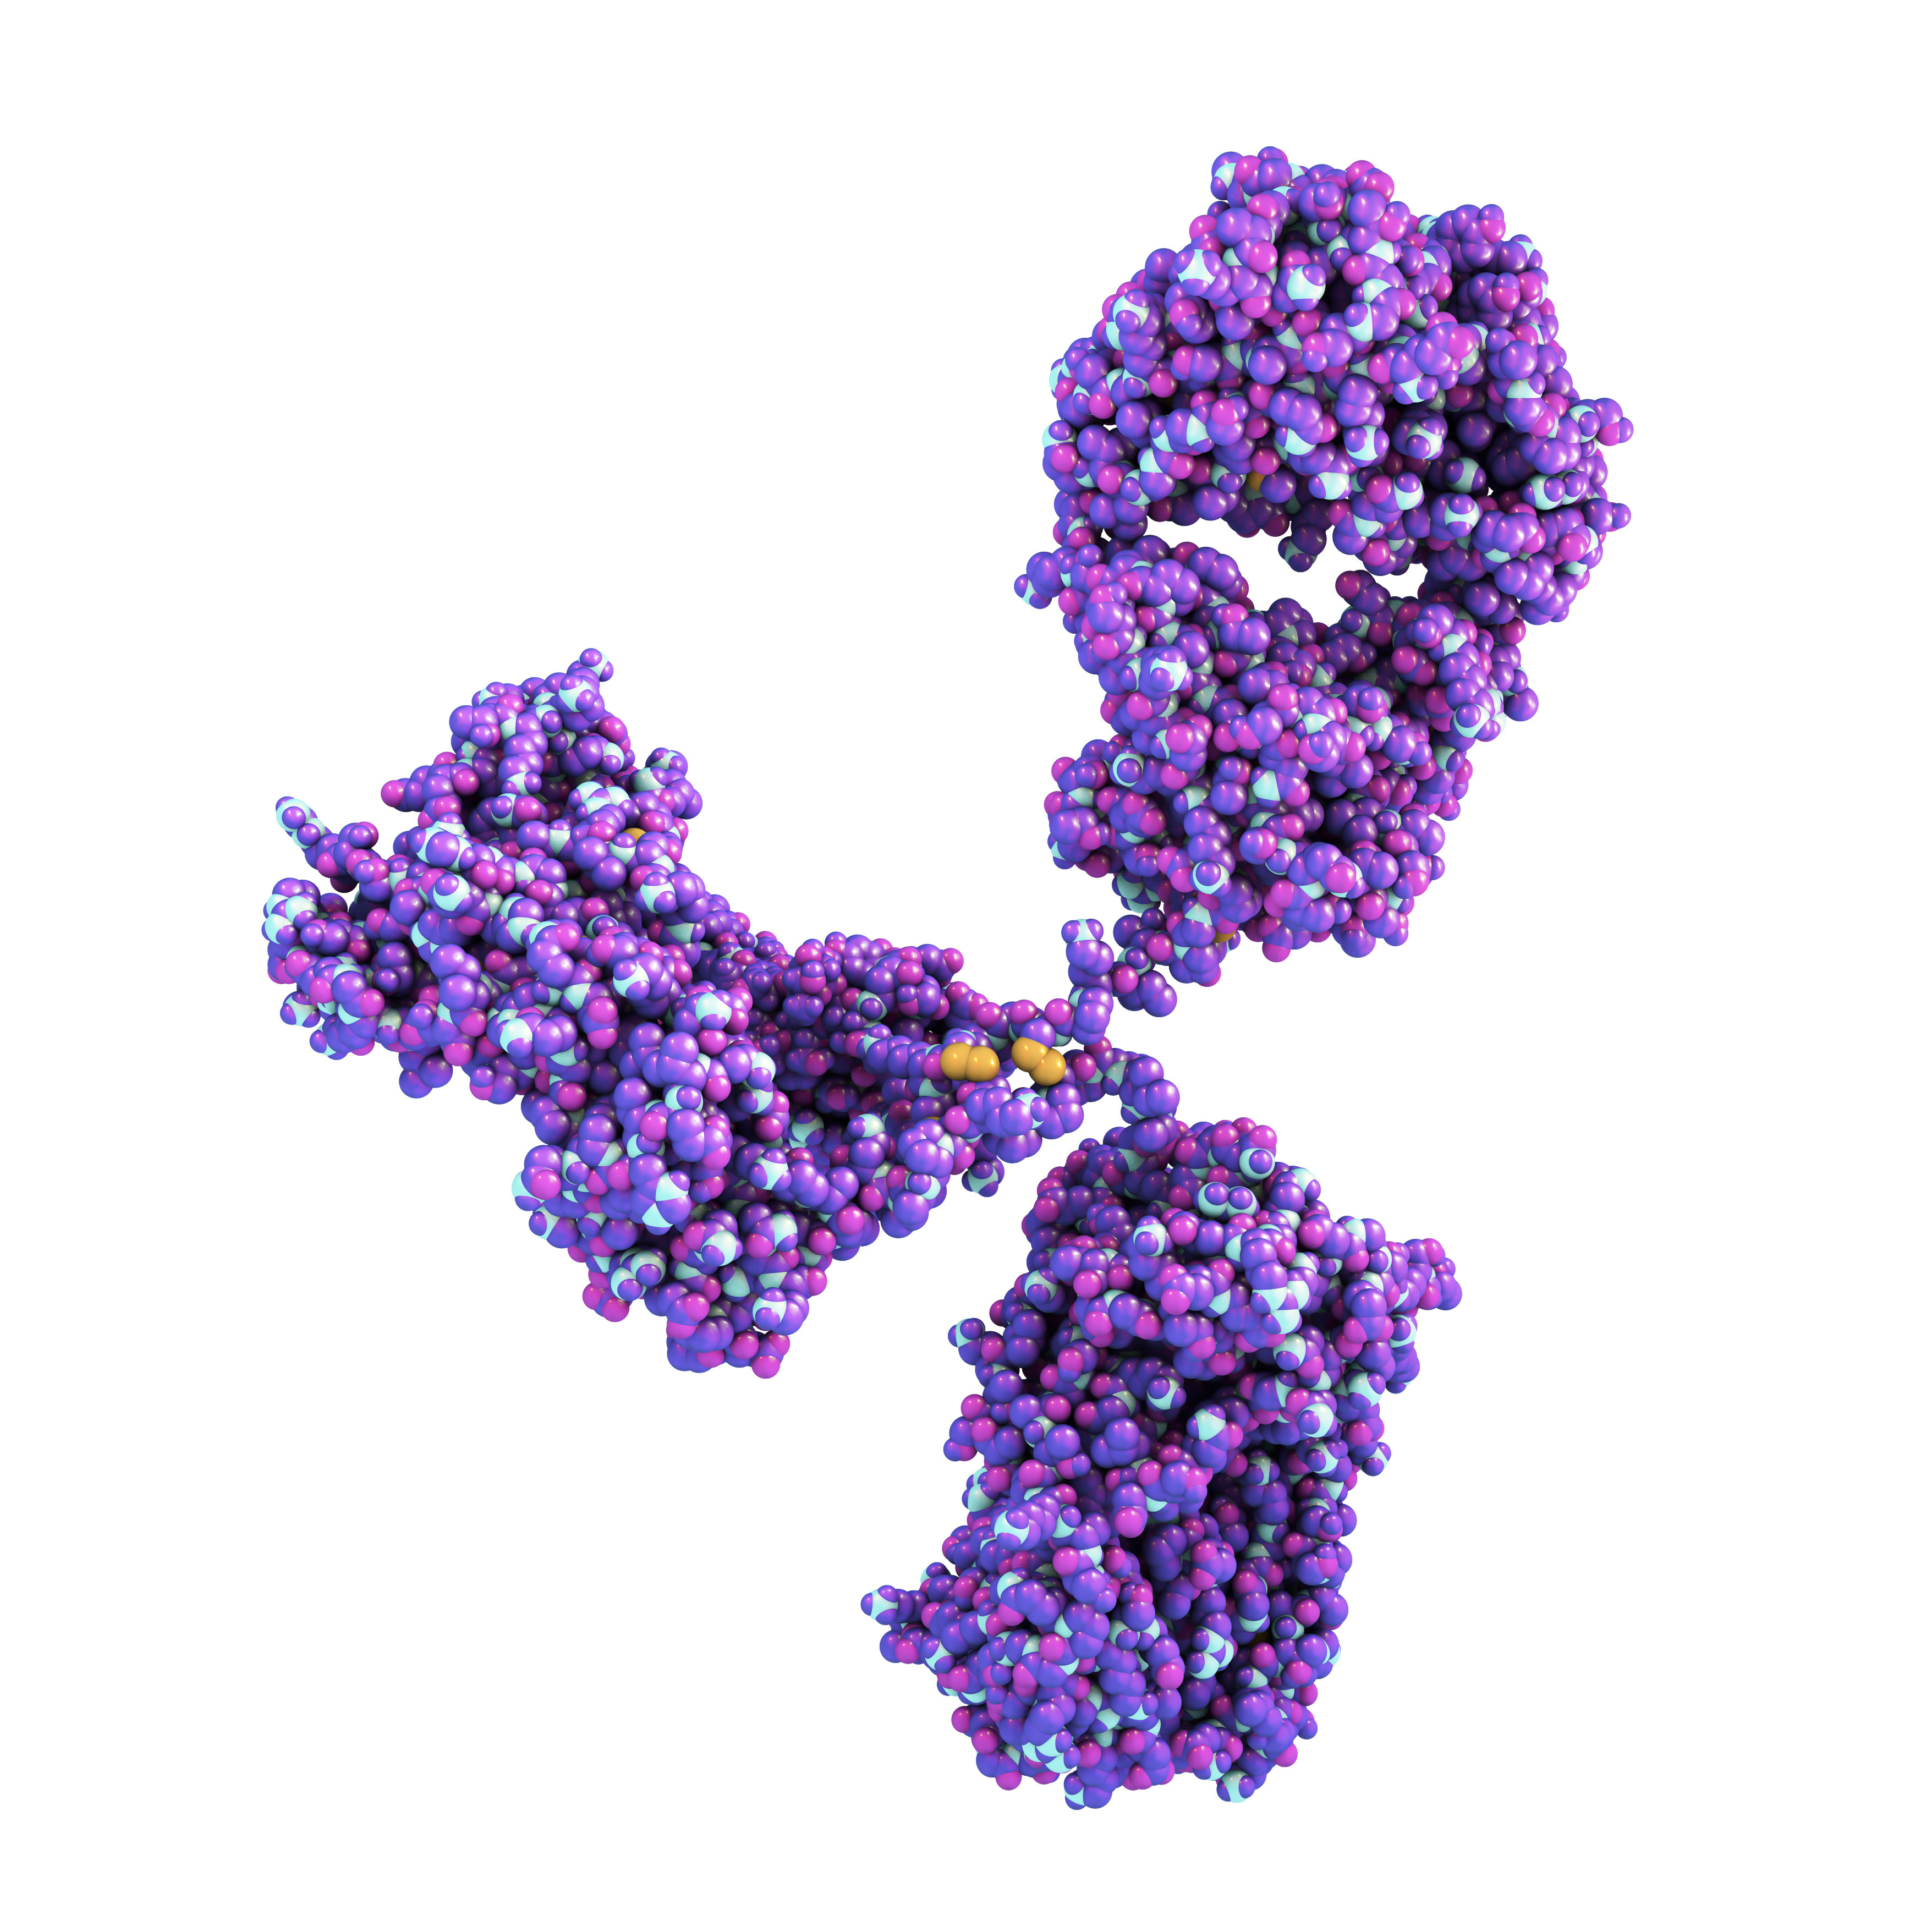 Mouse Anti Hepatitis E Virus Capsid (ORF2) Antibody (BD6)